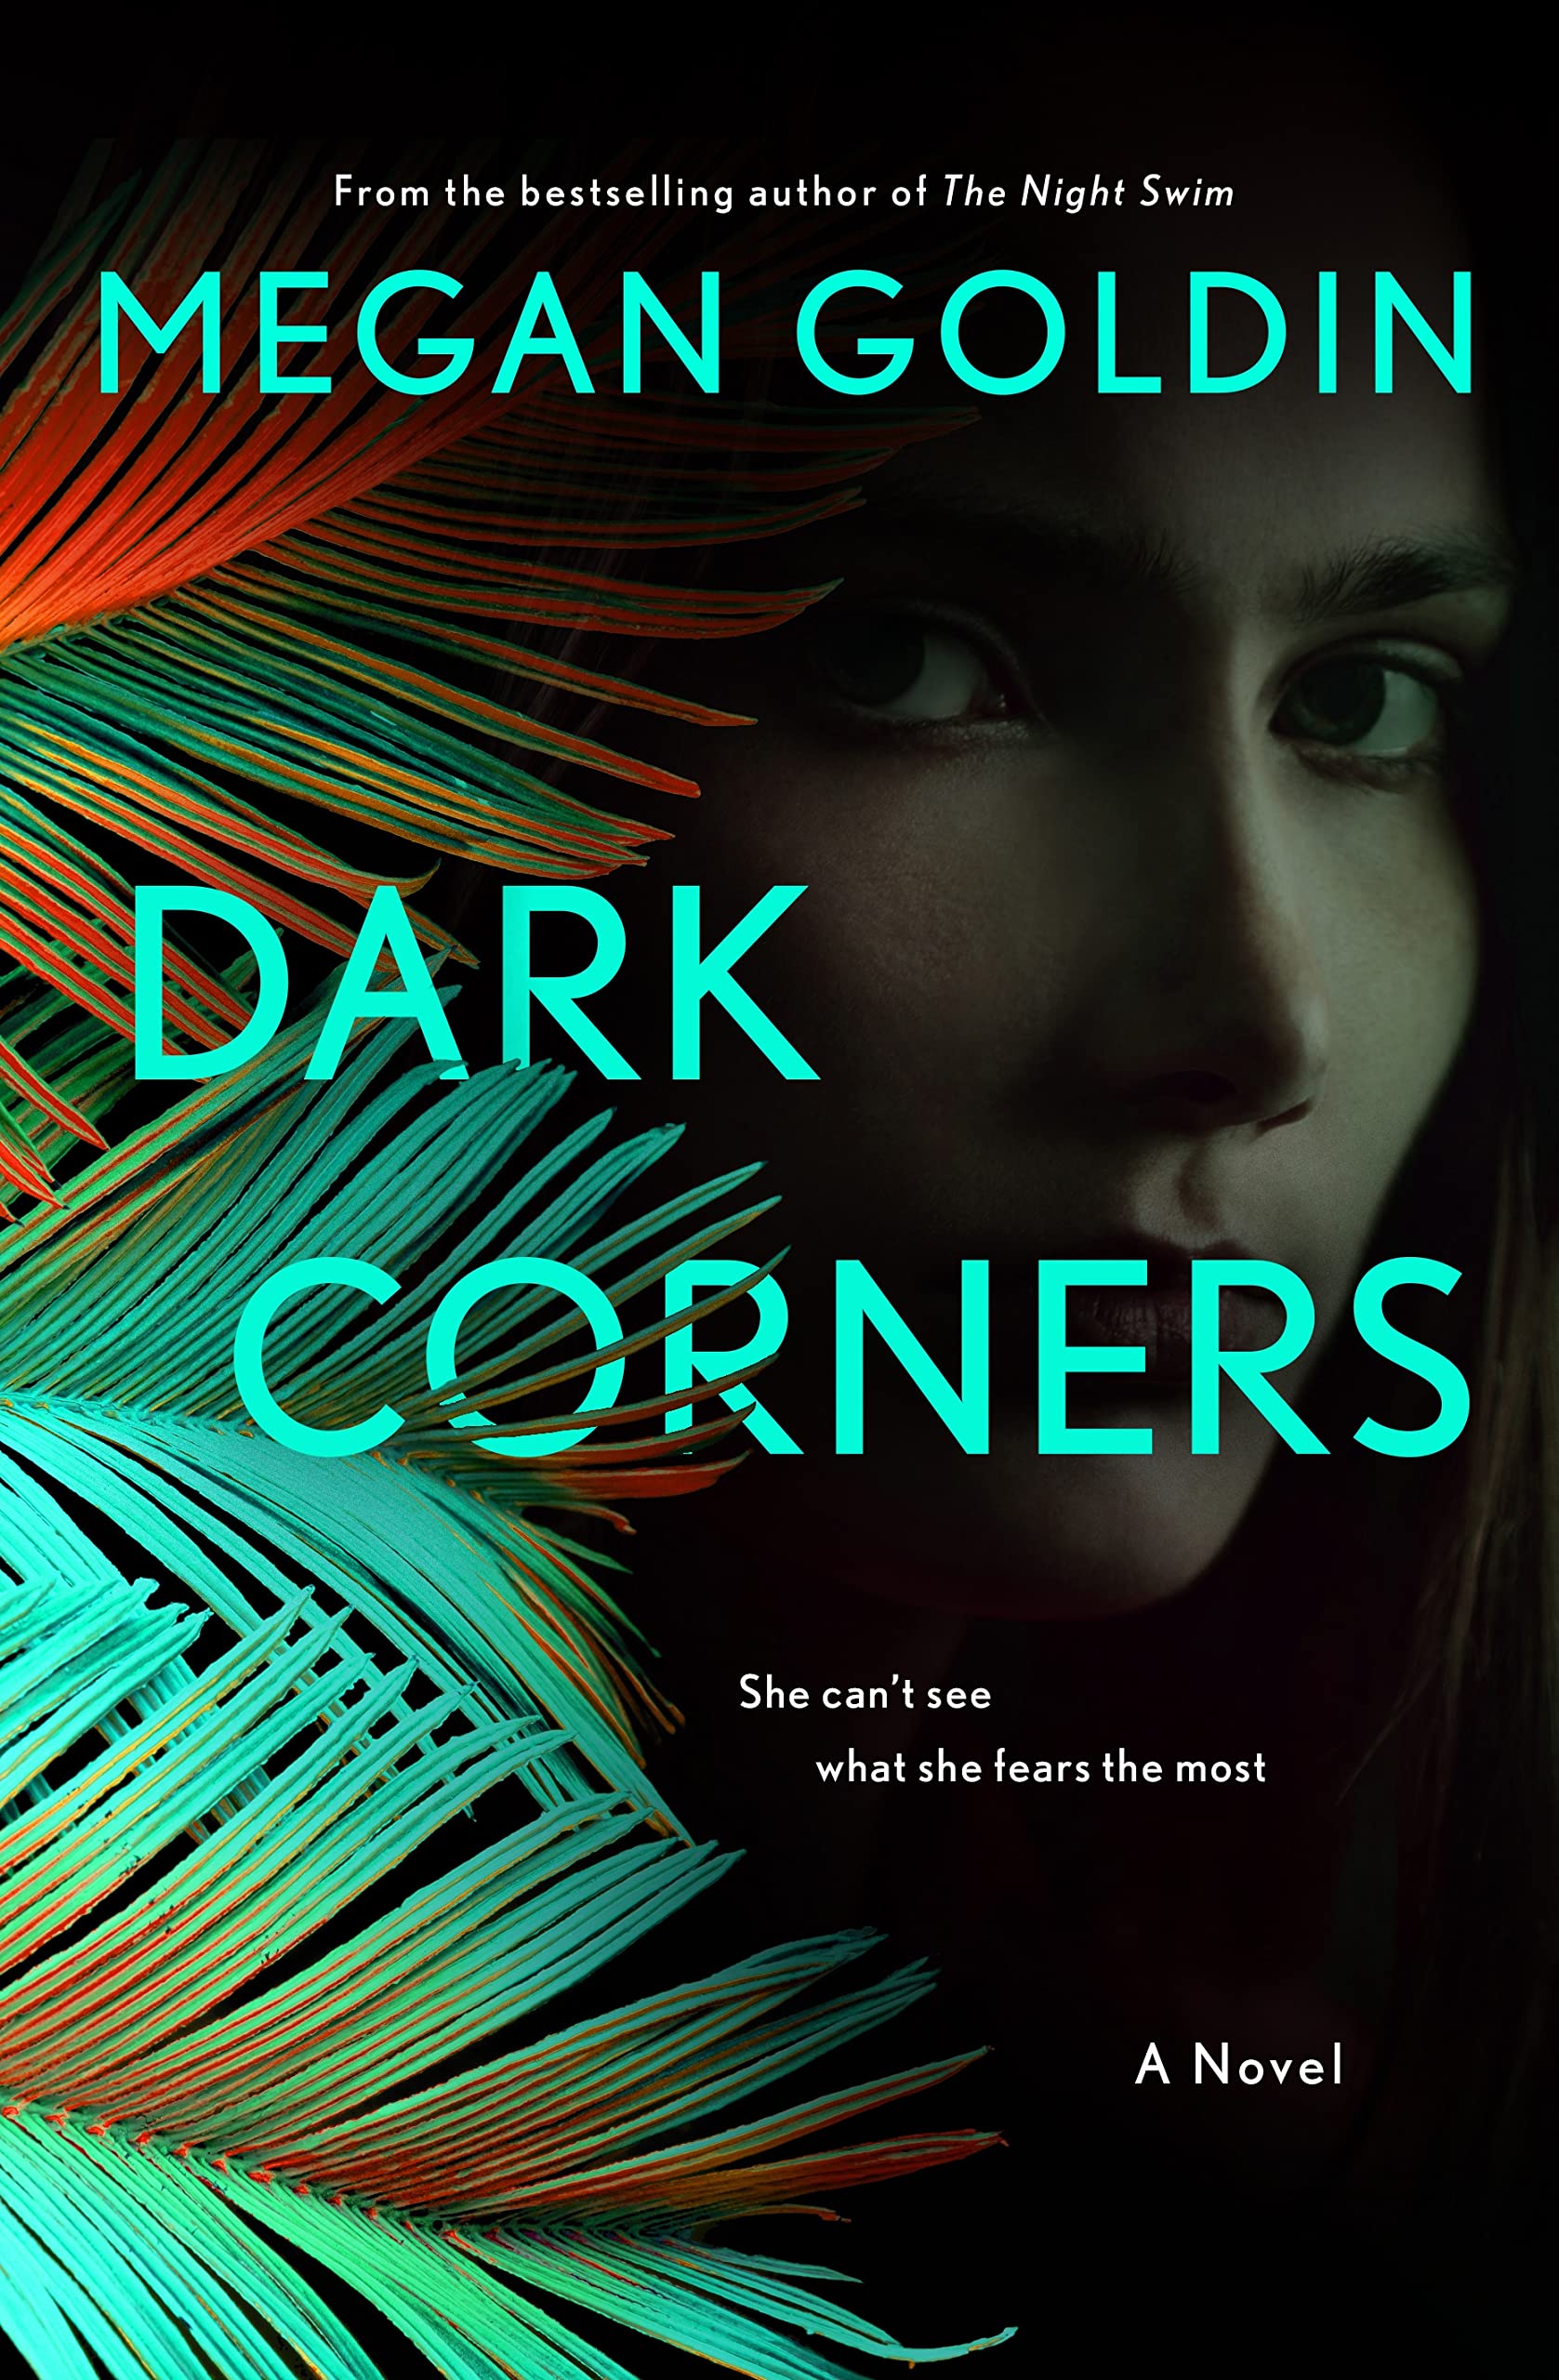 Image for "Dark Corners"